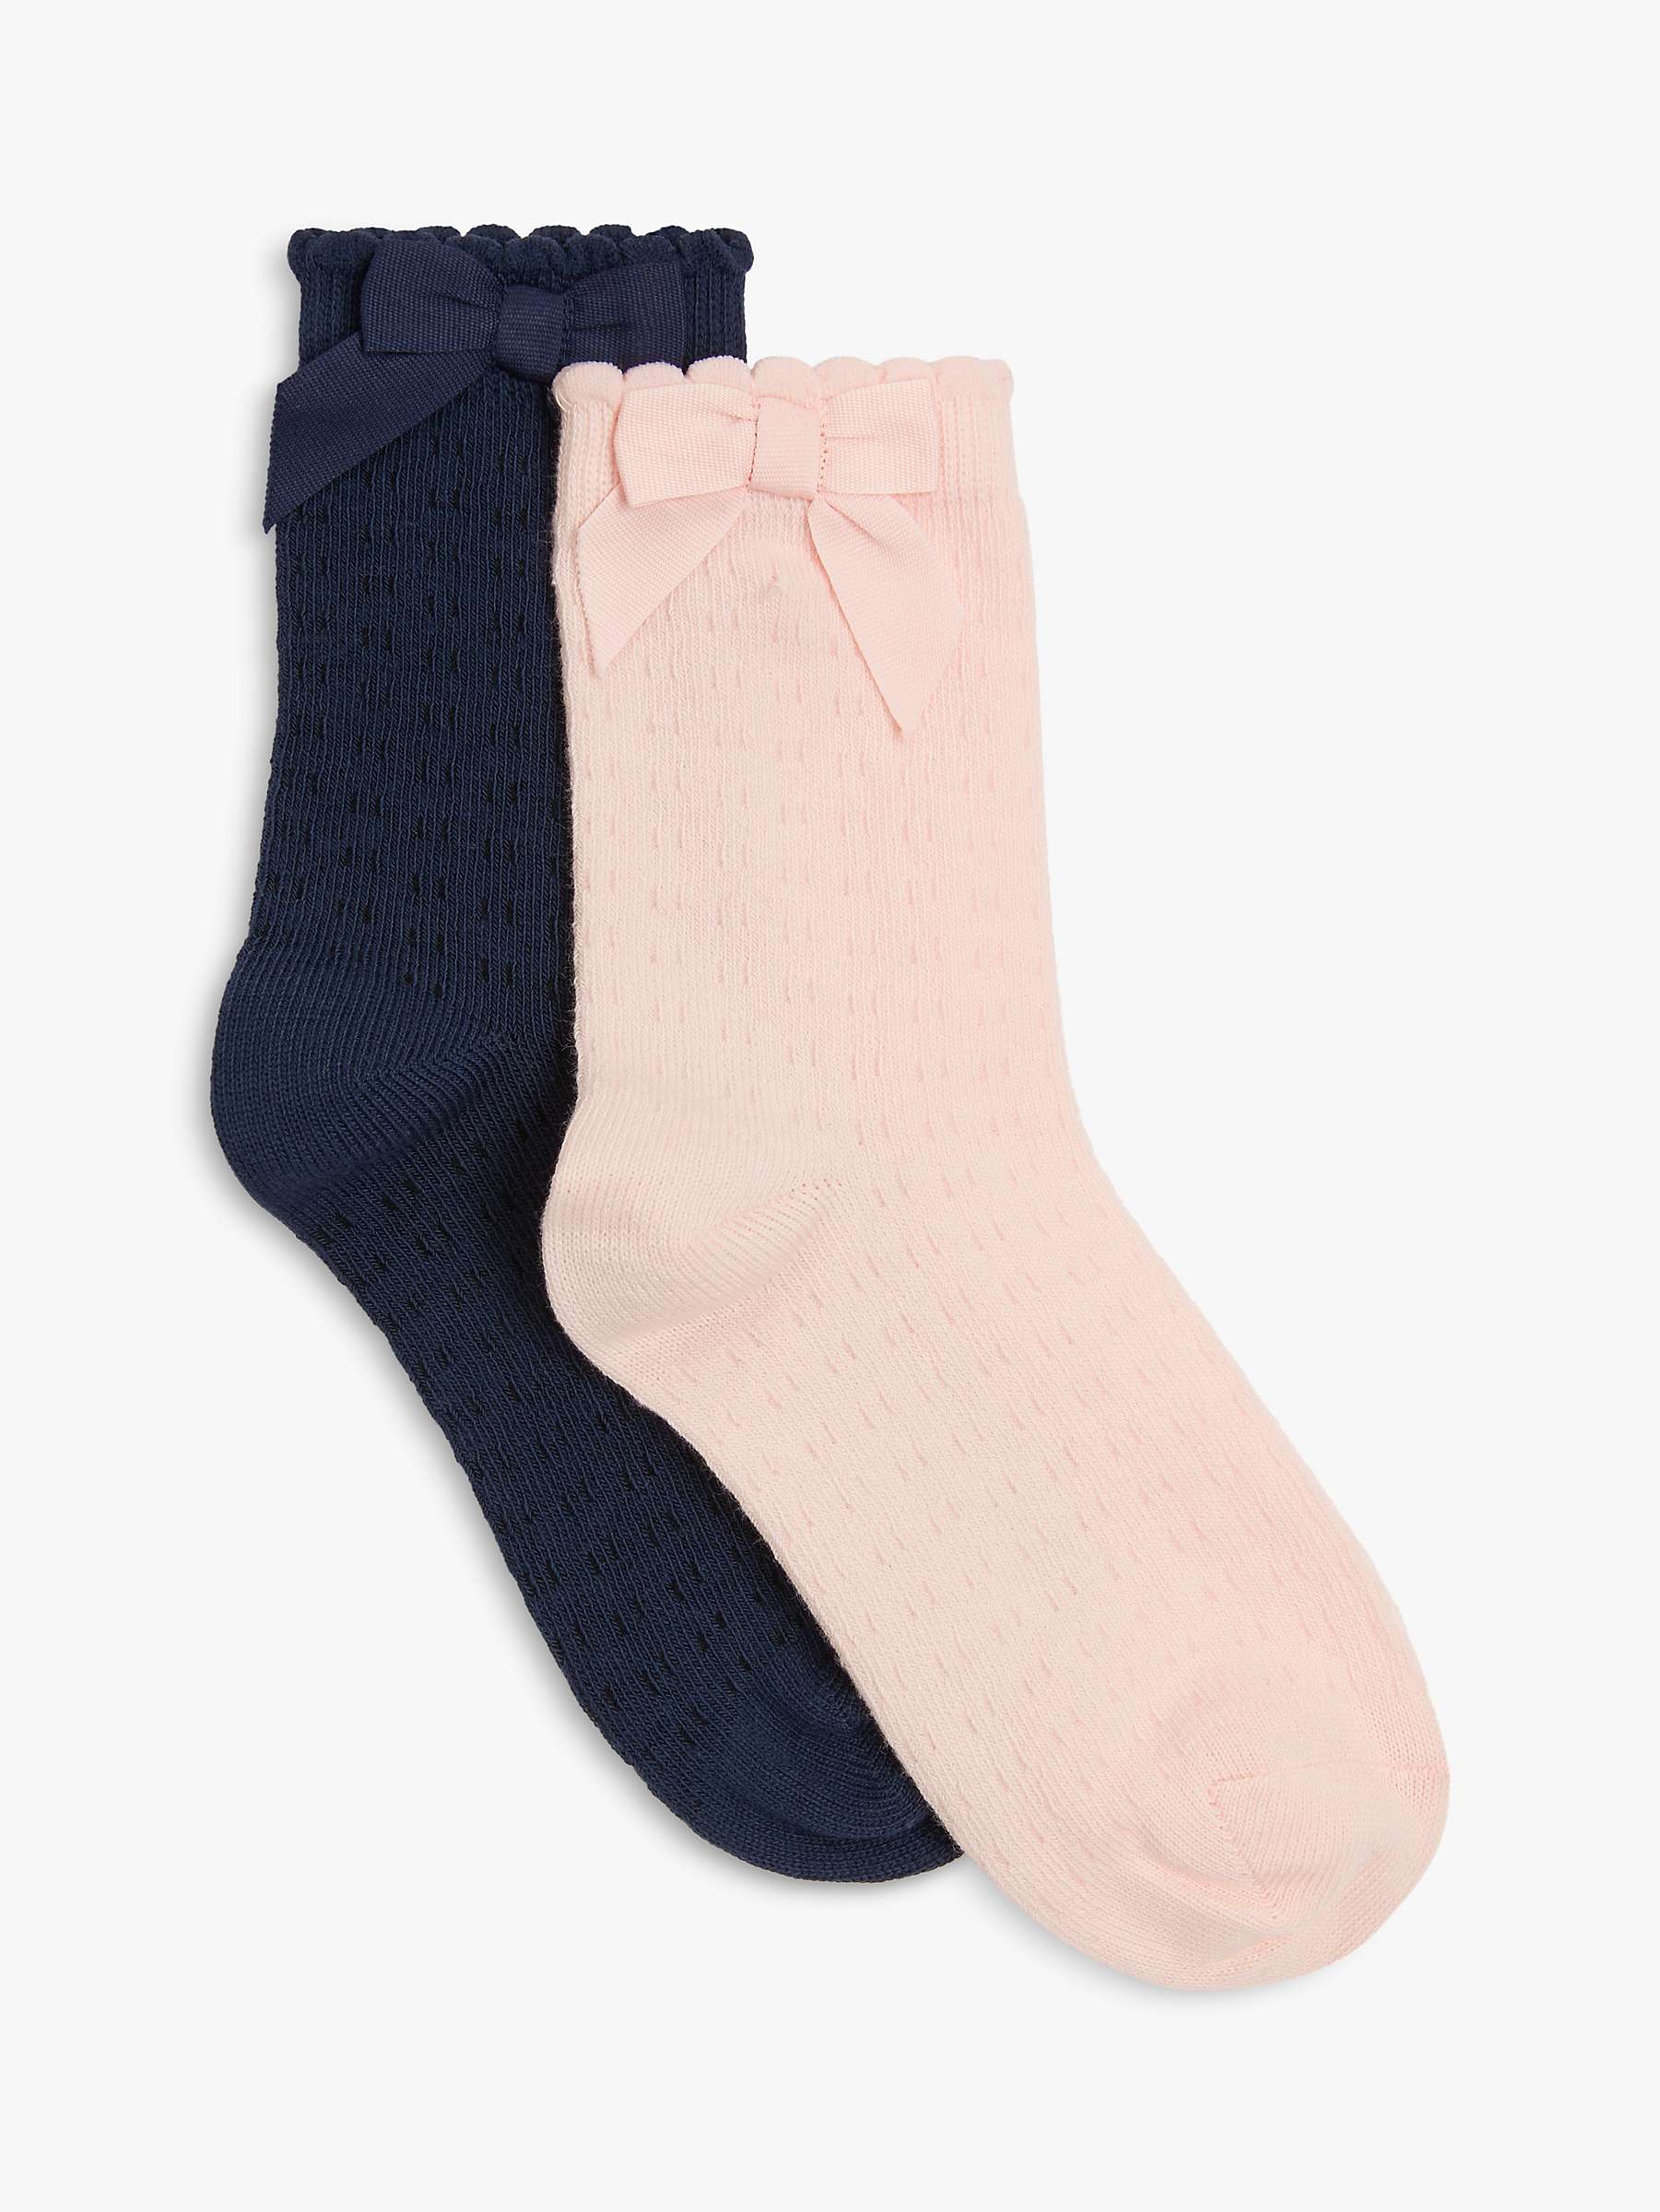 Buy John Lewis Kids' Ribbon Frill Top Socks, Pack of 2, Blue/Pink Online at johnlewis.com